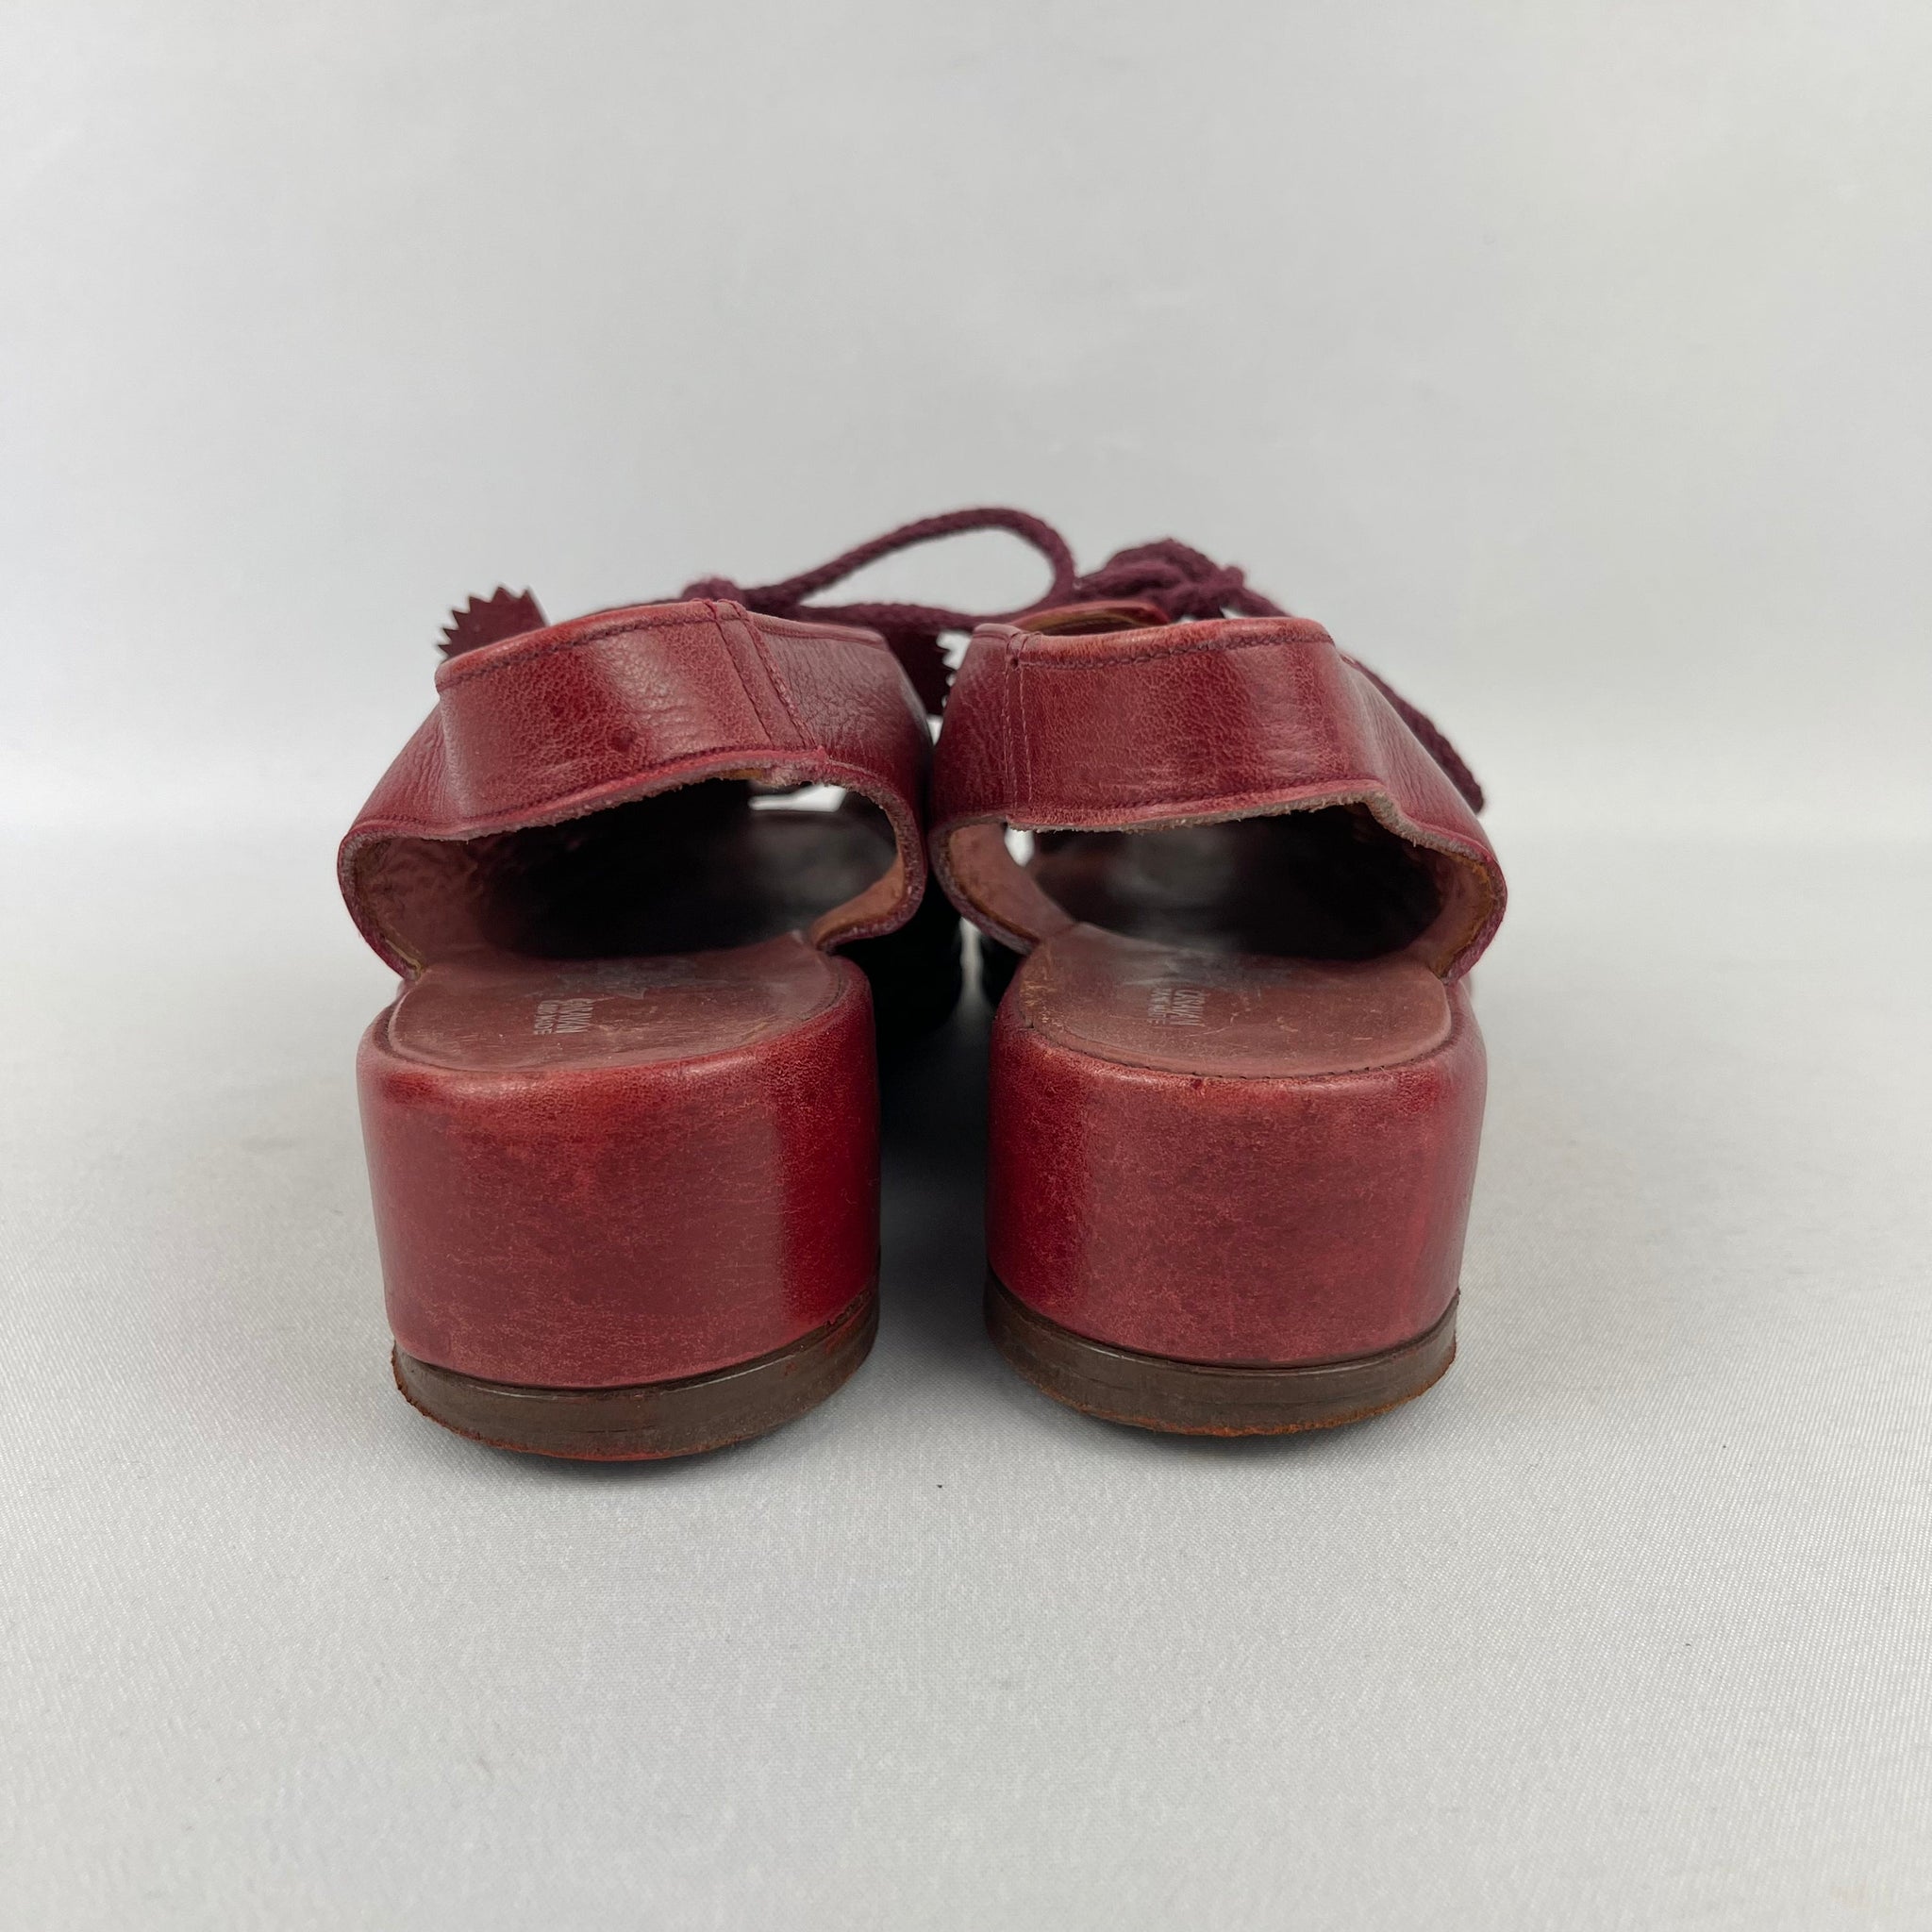 To Boot New York Summer Sandals for Men | Mercari